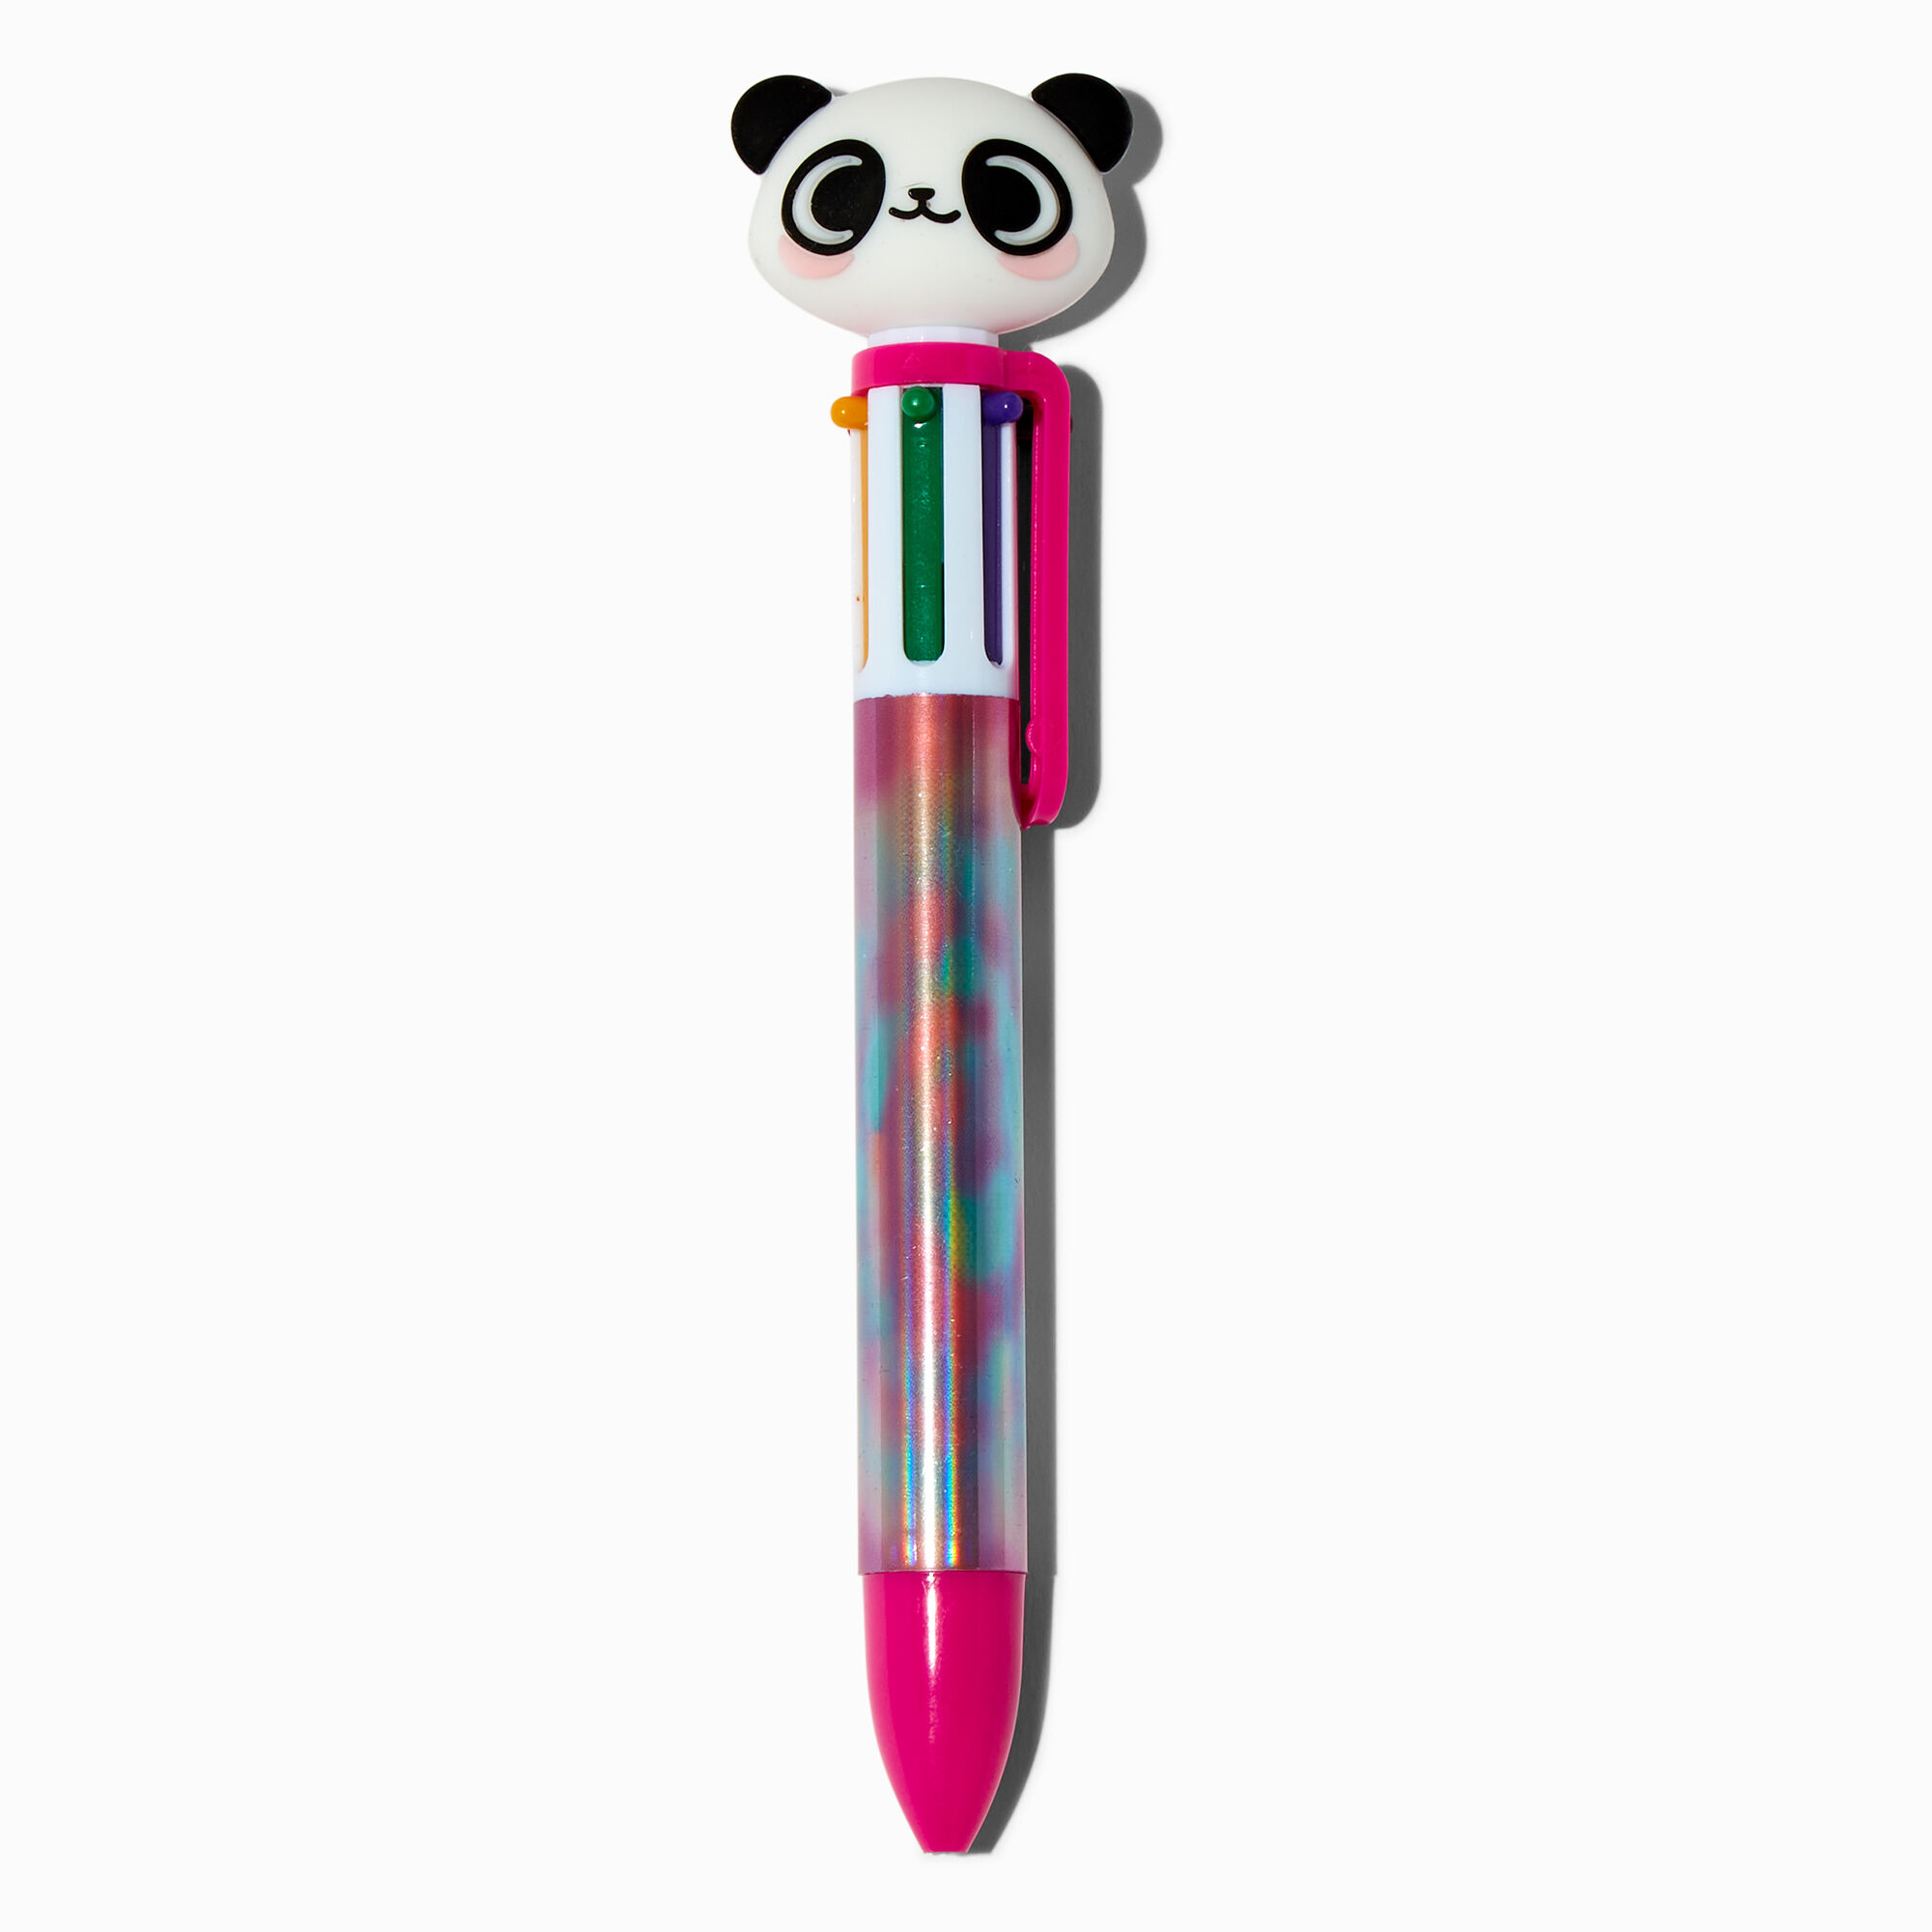 View Claires Panda Bear Multicolored Pen Rainbow information